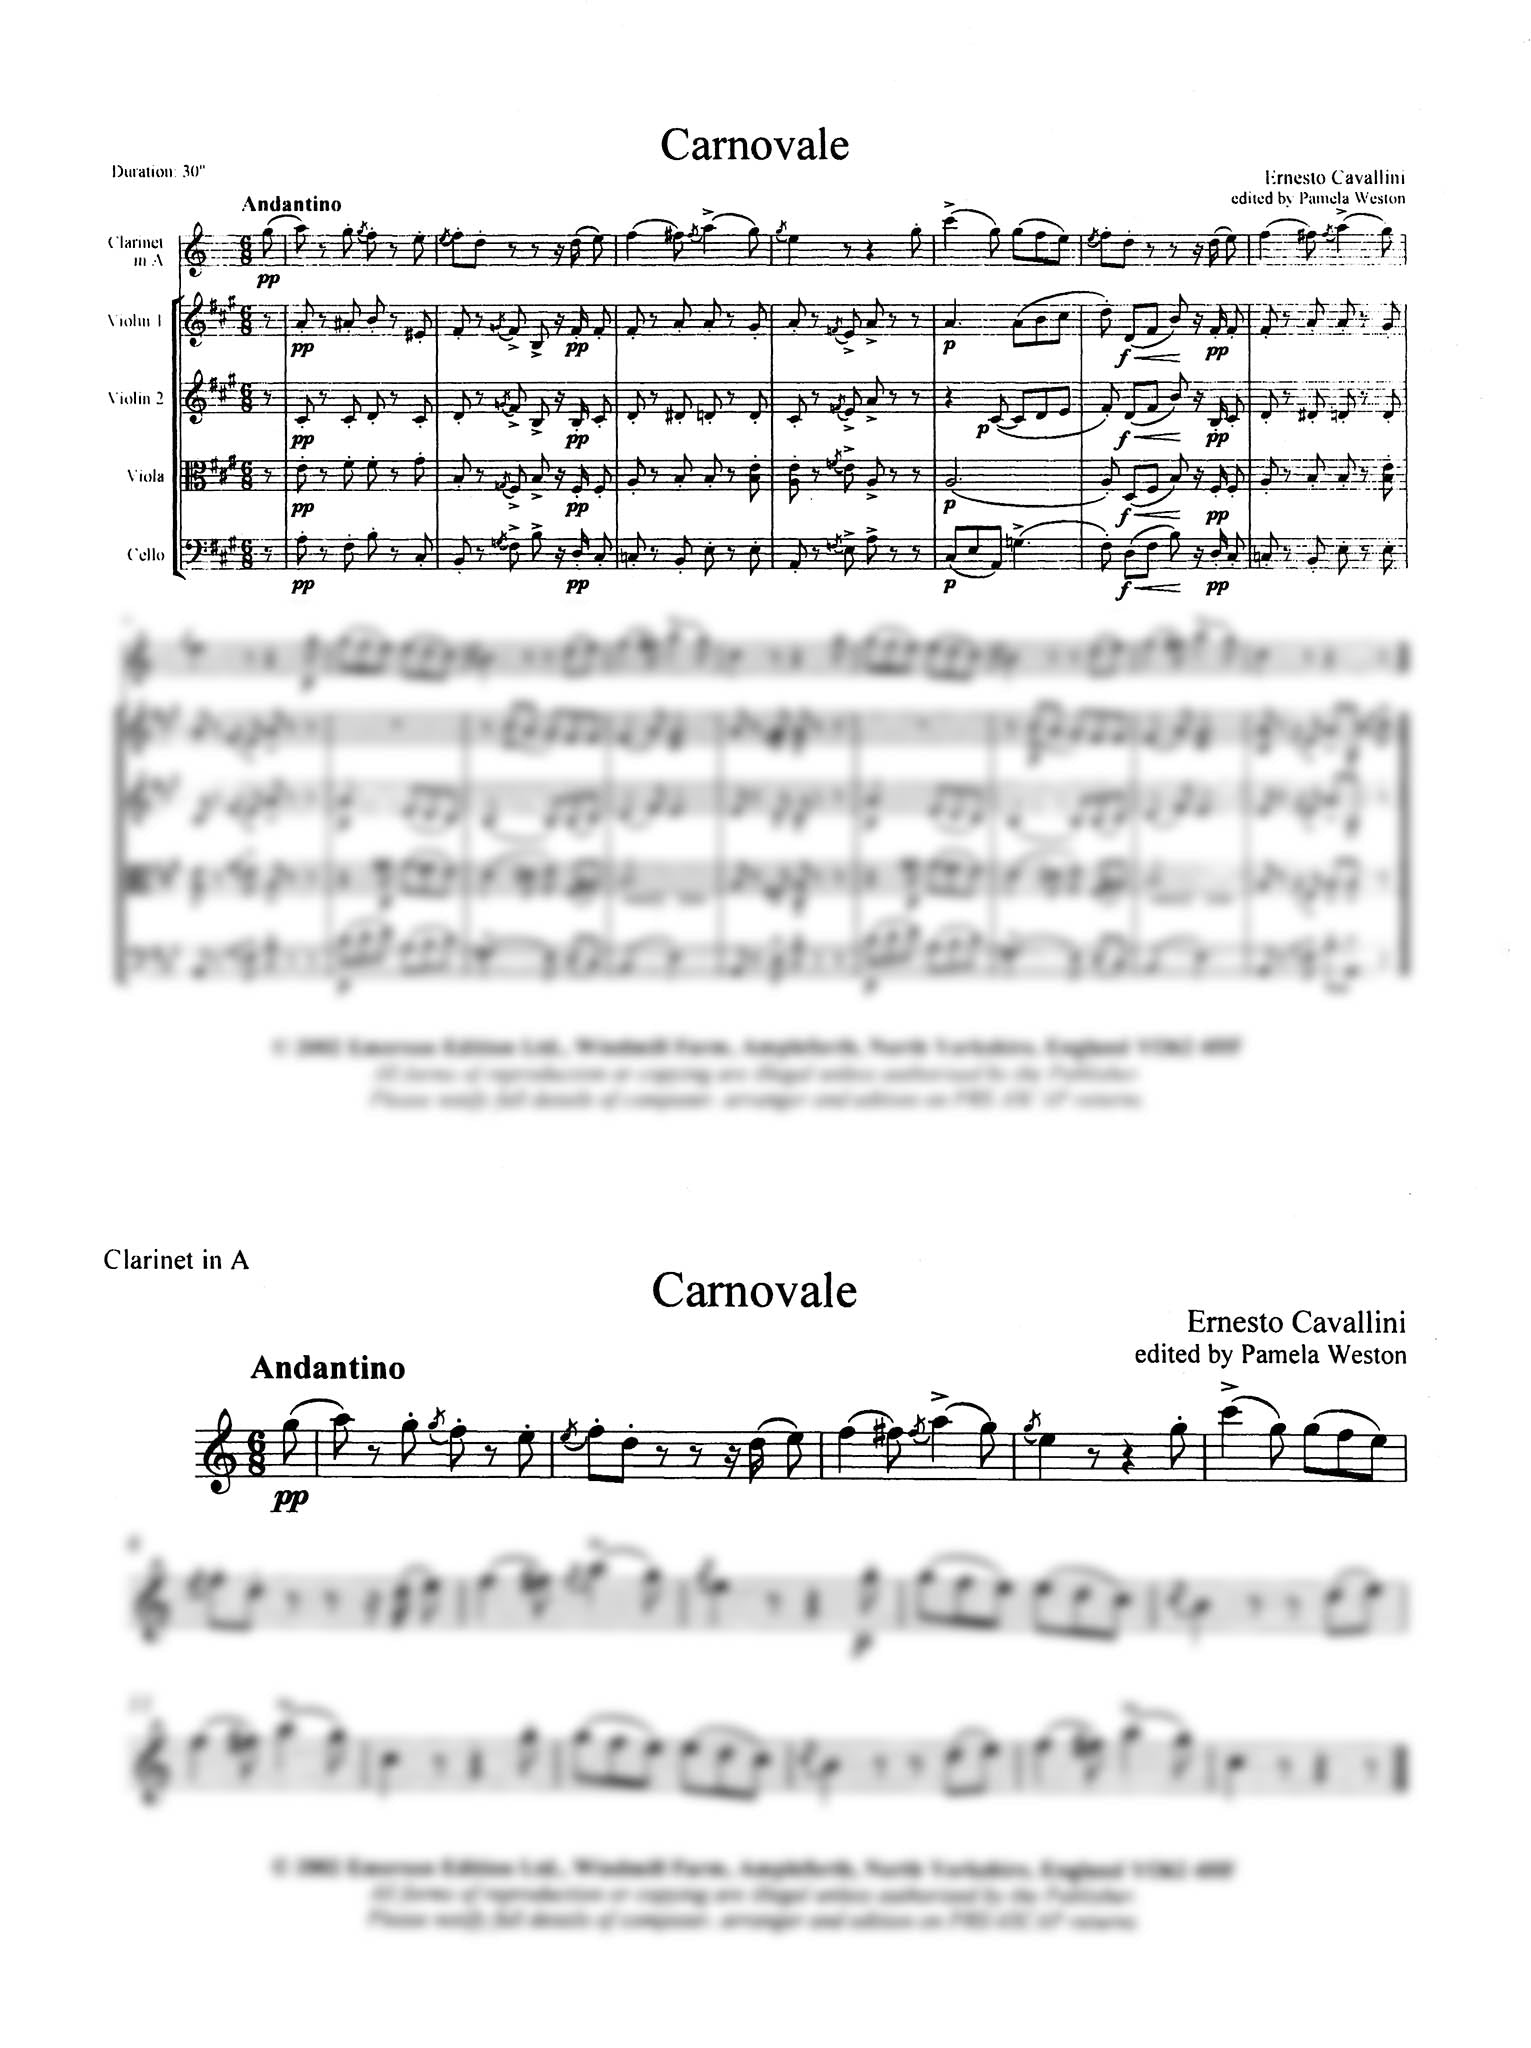 Carnovale Score Clarinet part